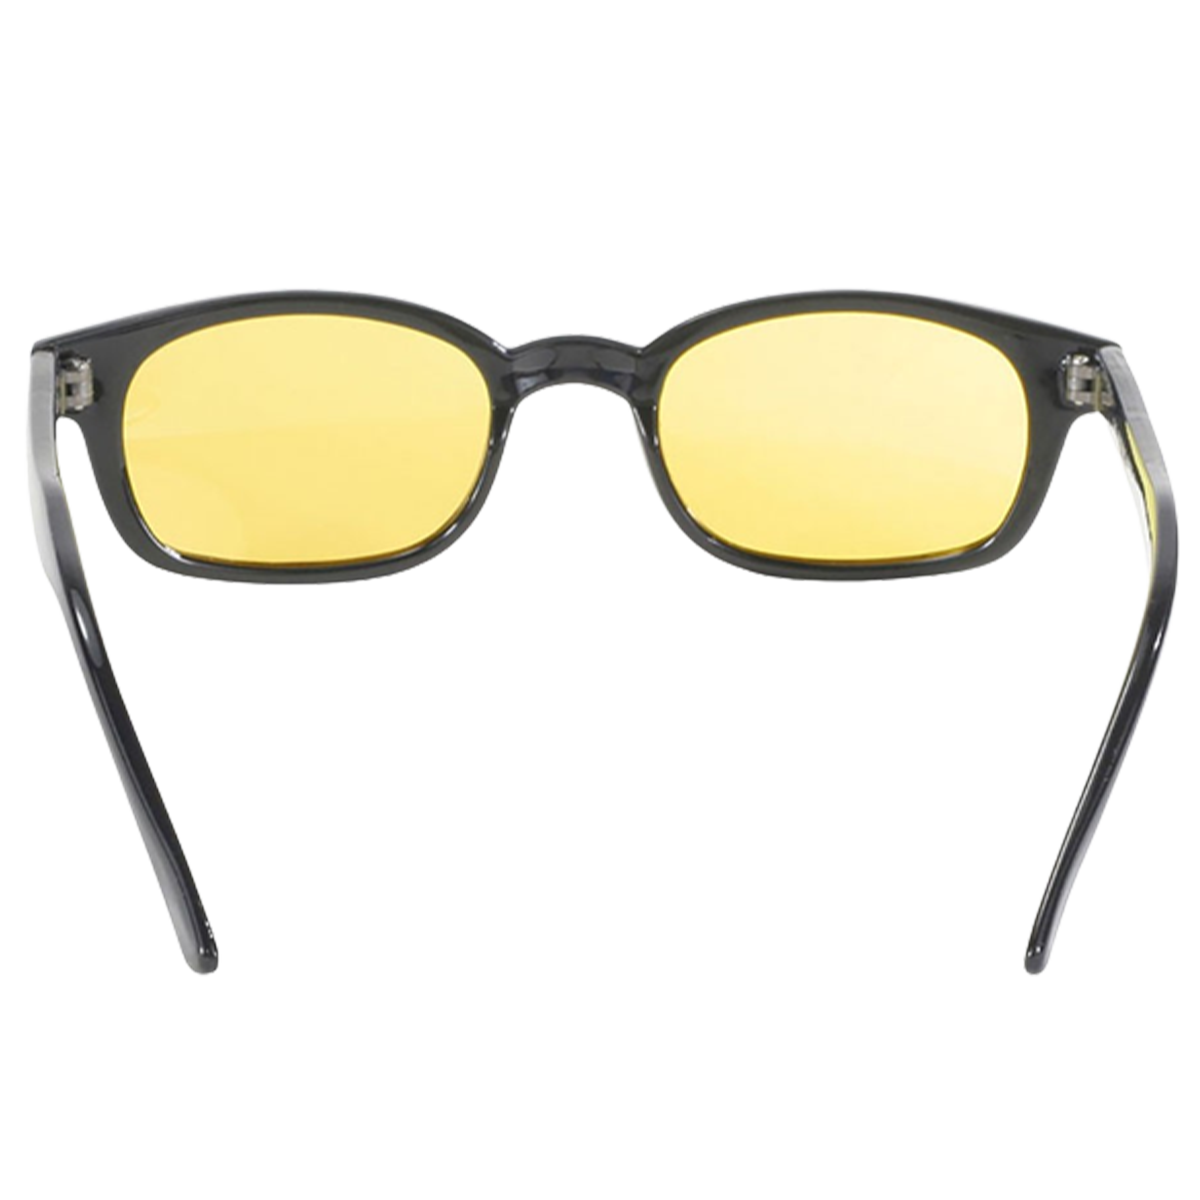 Sunglasses KD's 20129 - Polarized yellow lenses